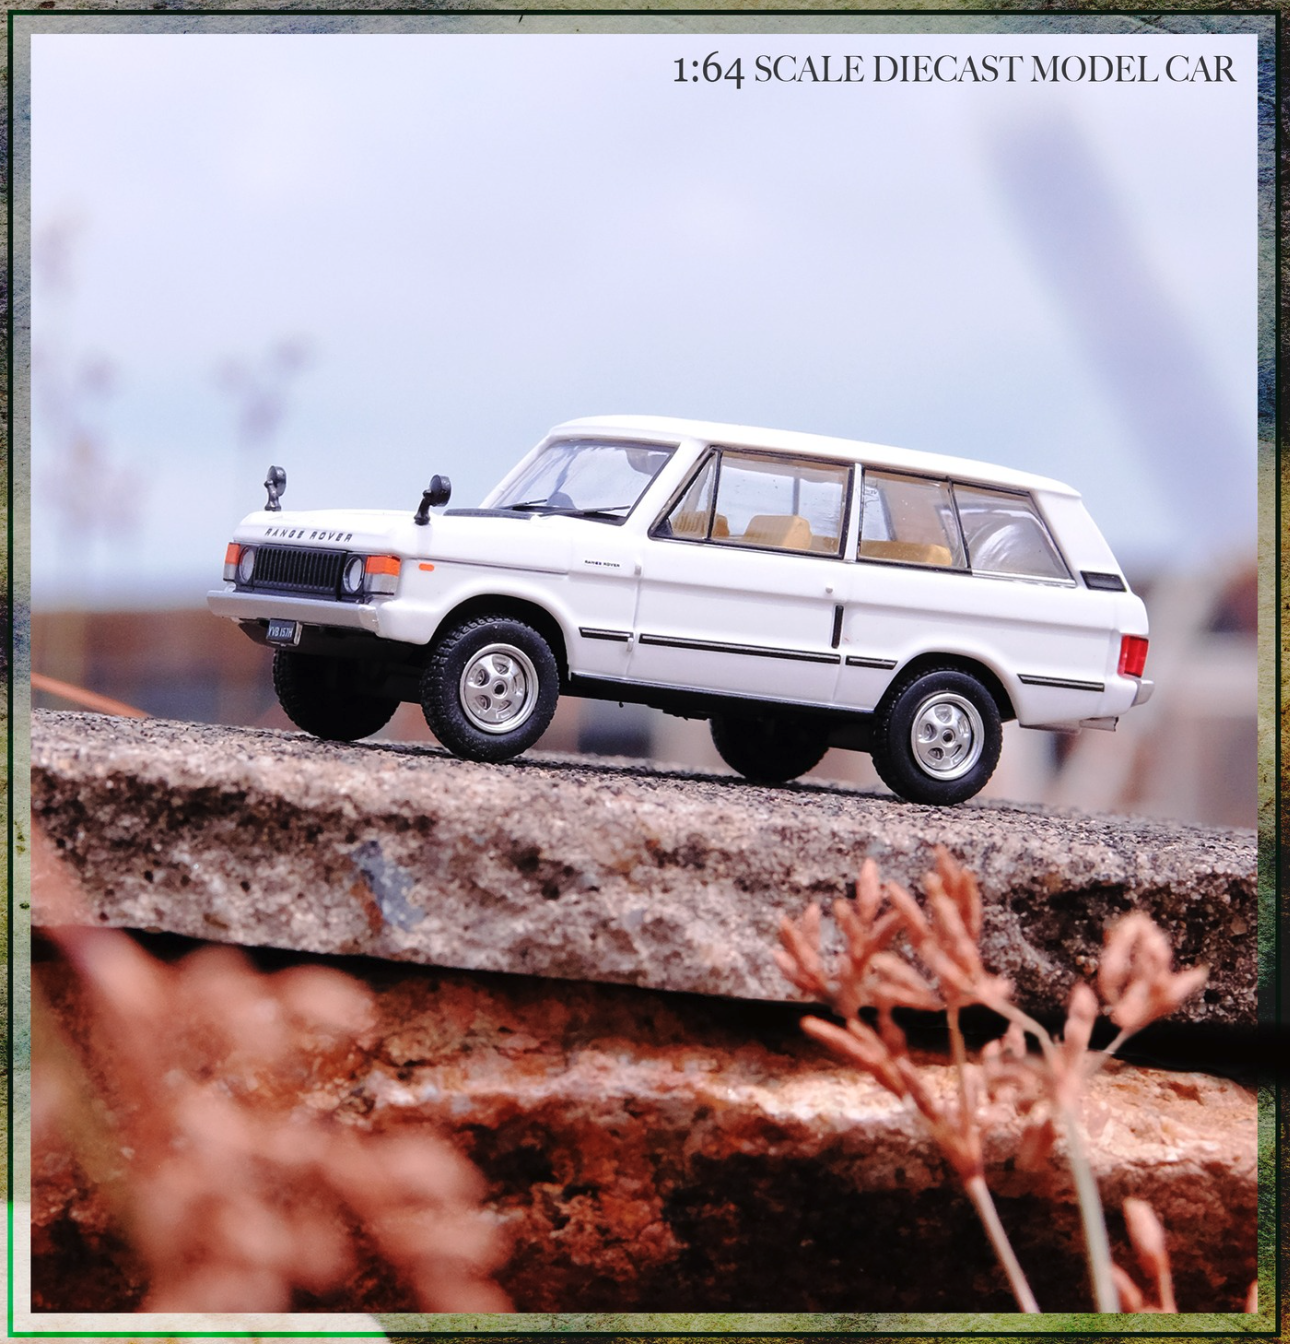 Skala 1/64 1992 Range Rover Classic, White fr Inno64